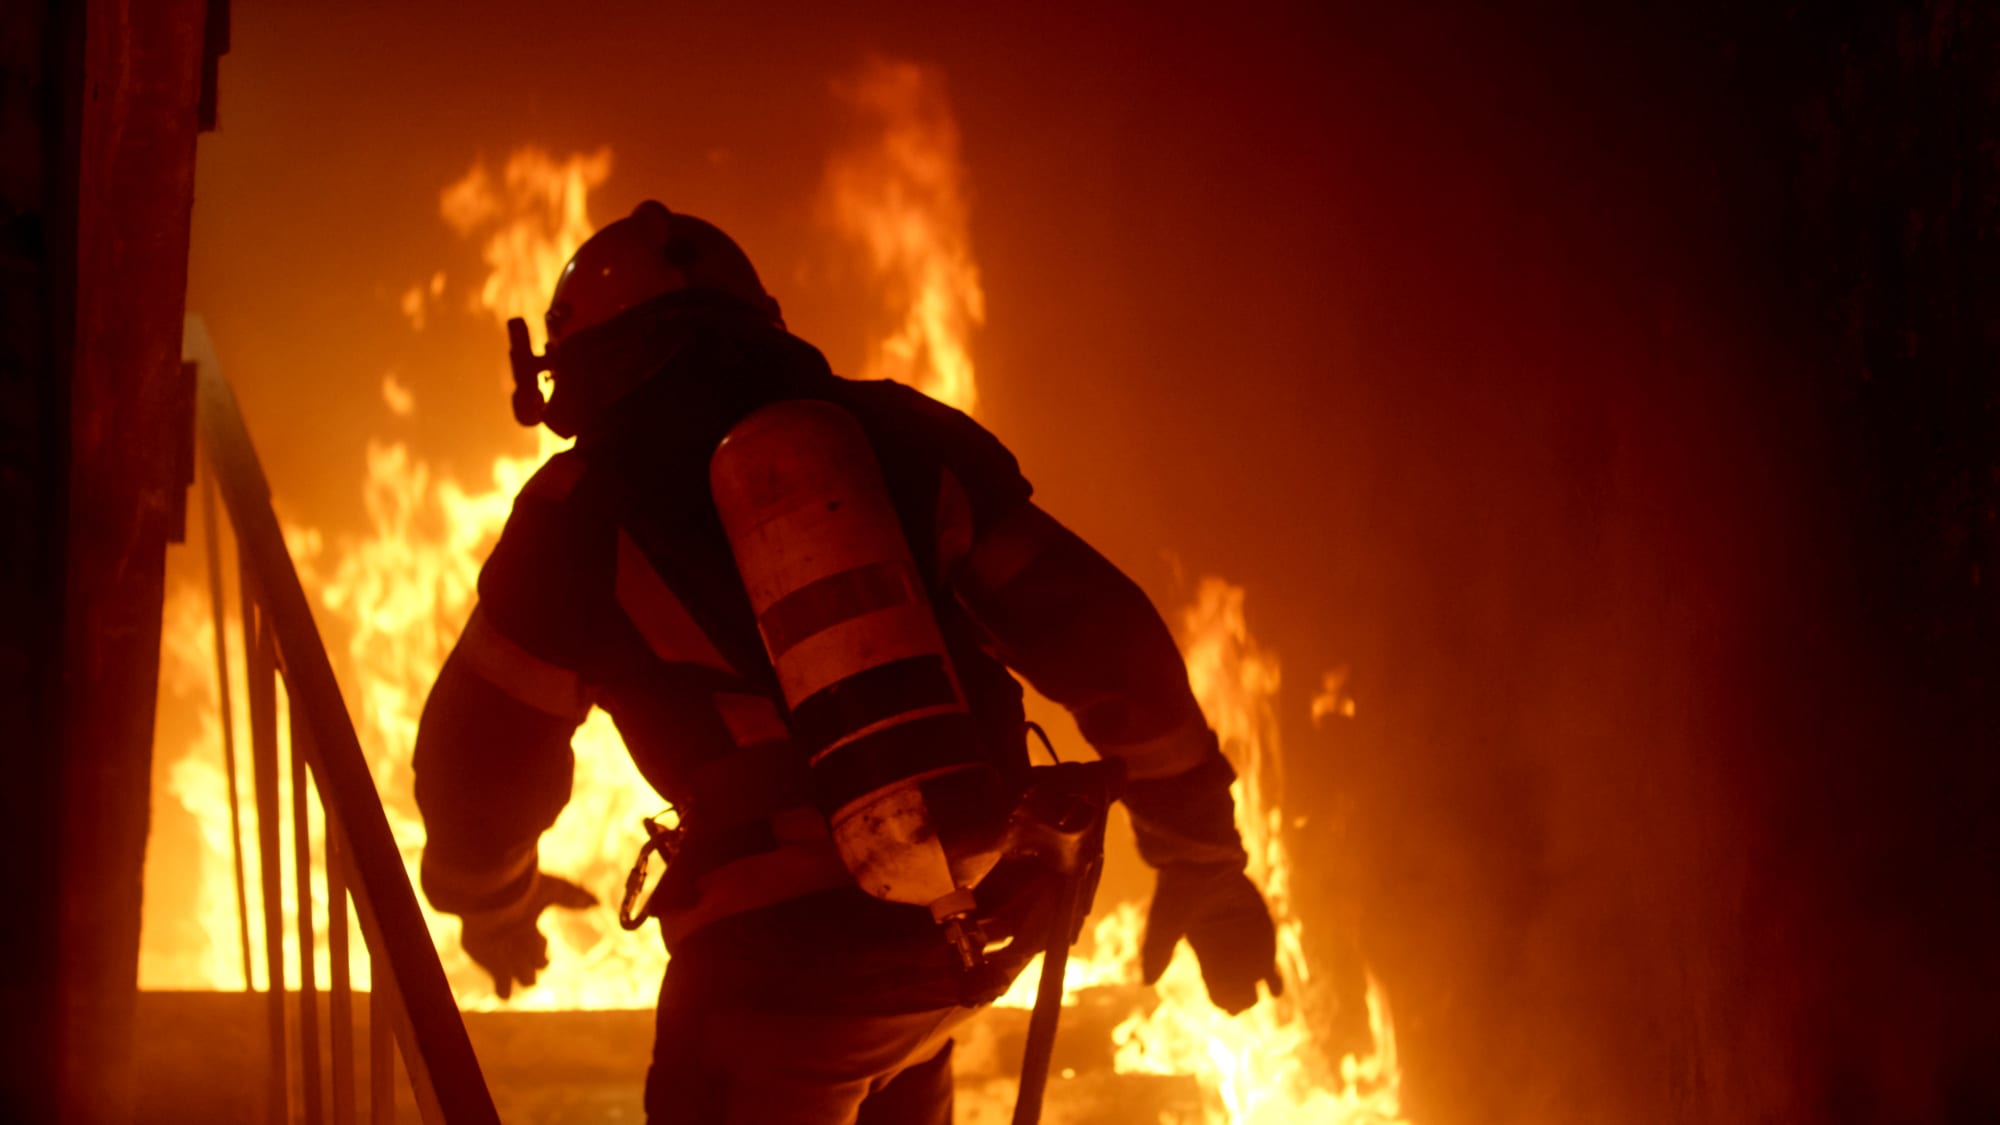 Read more about the article Horrific Fire brings Devastation!